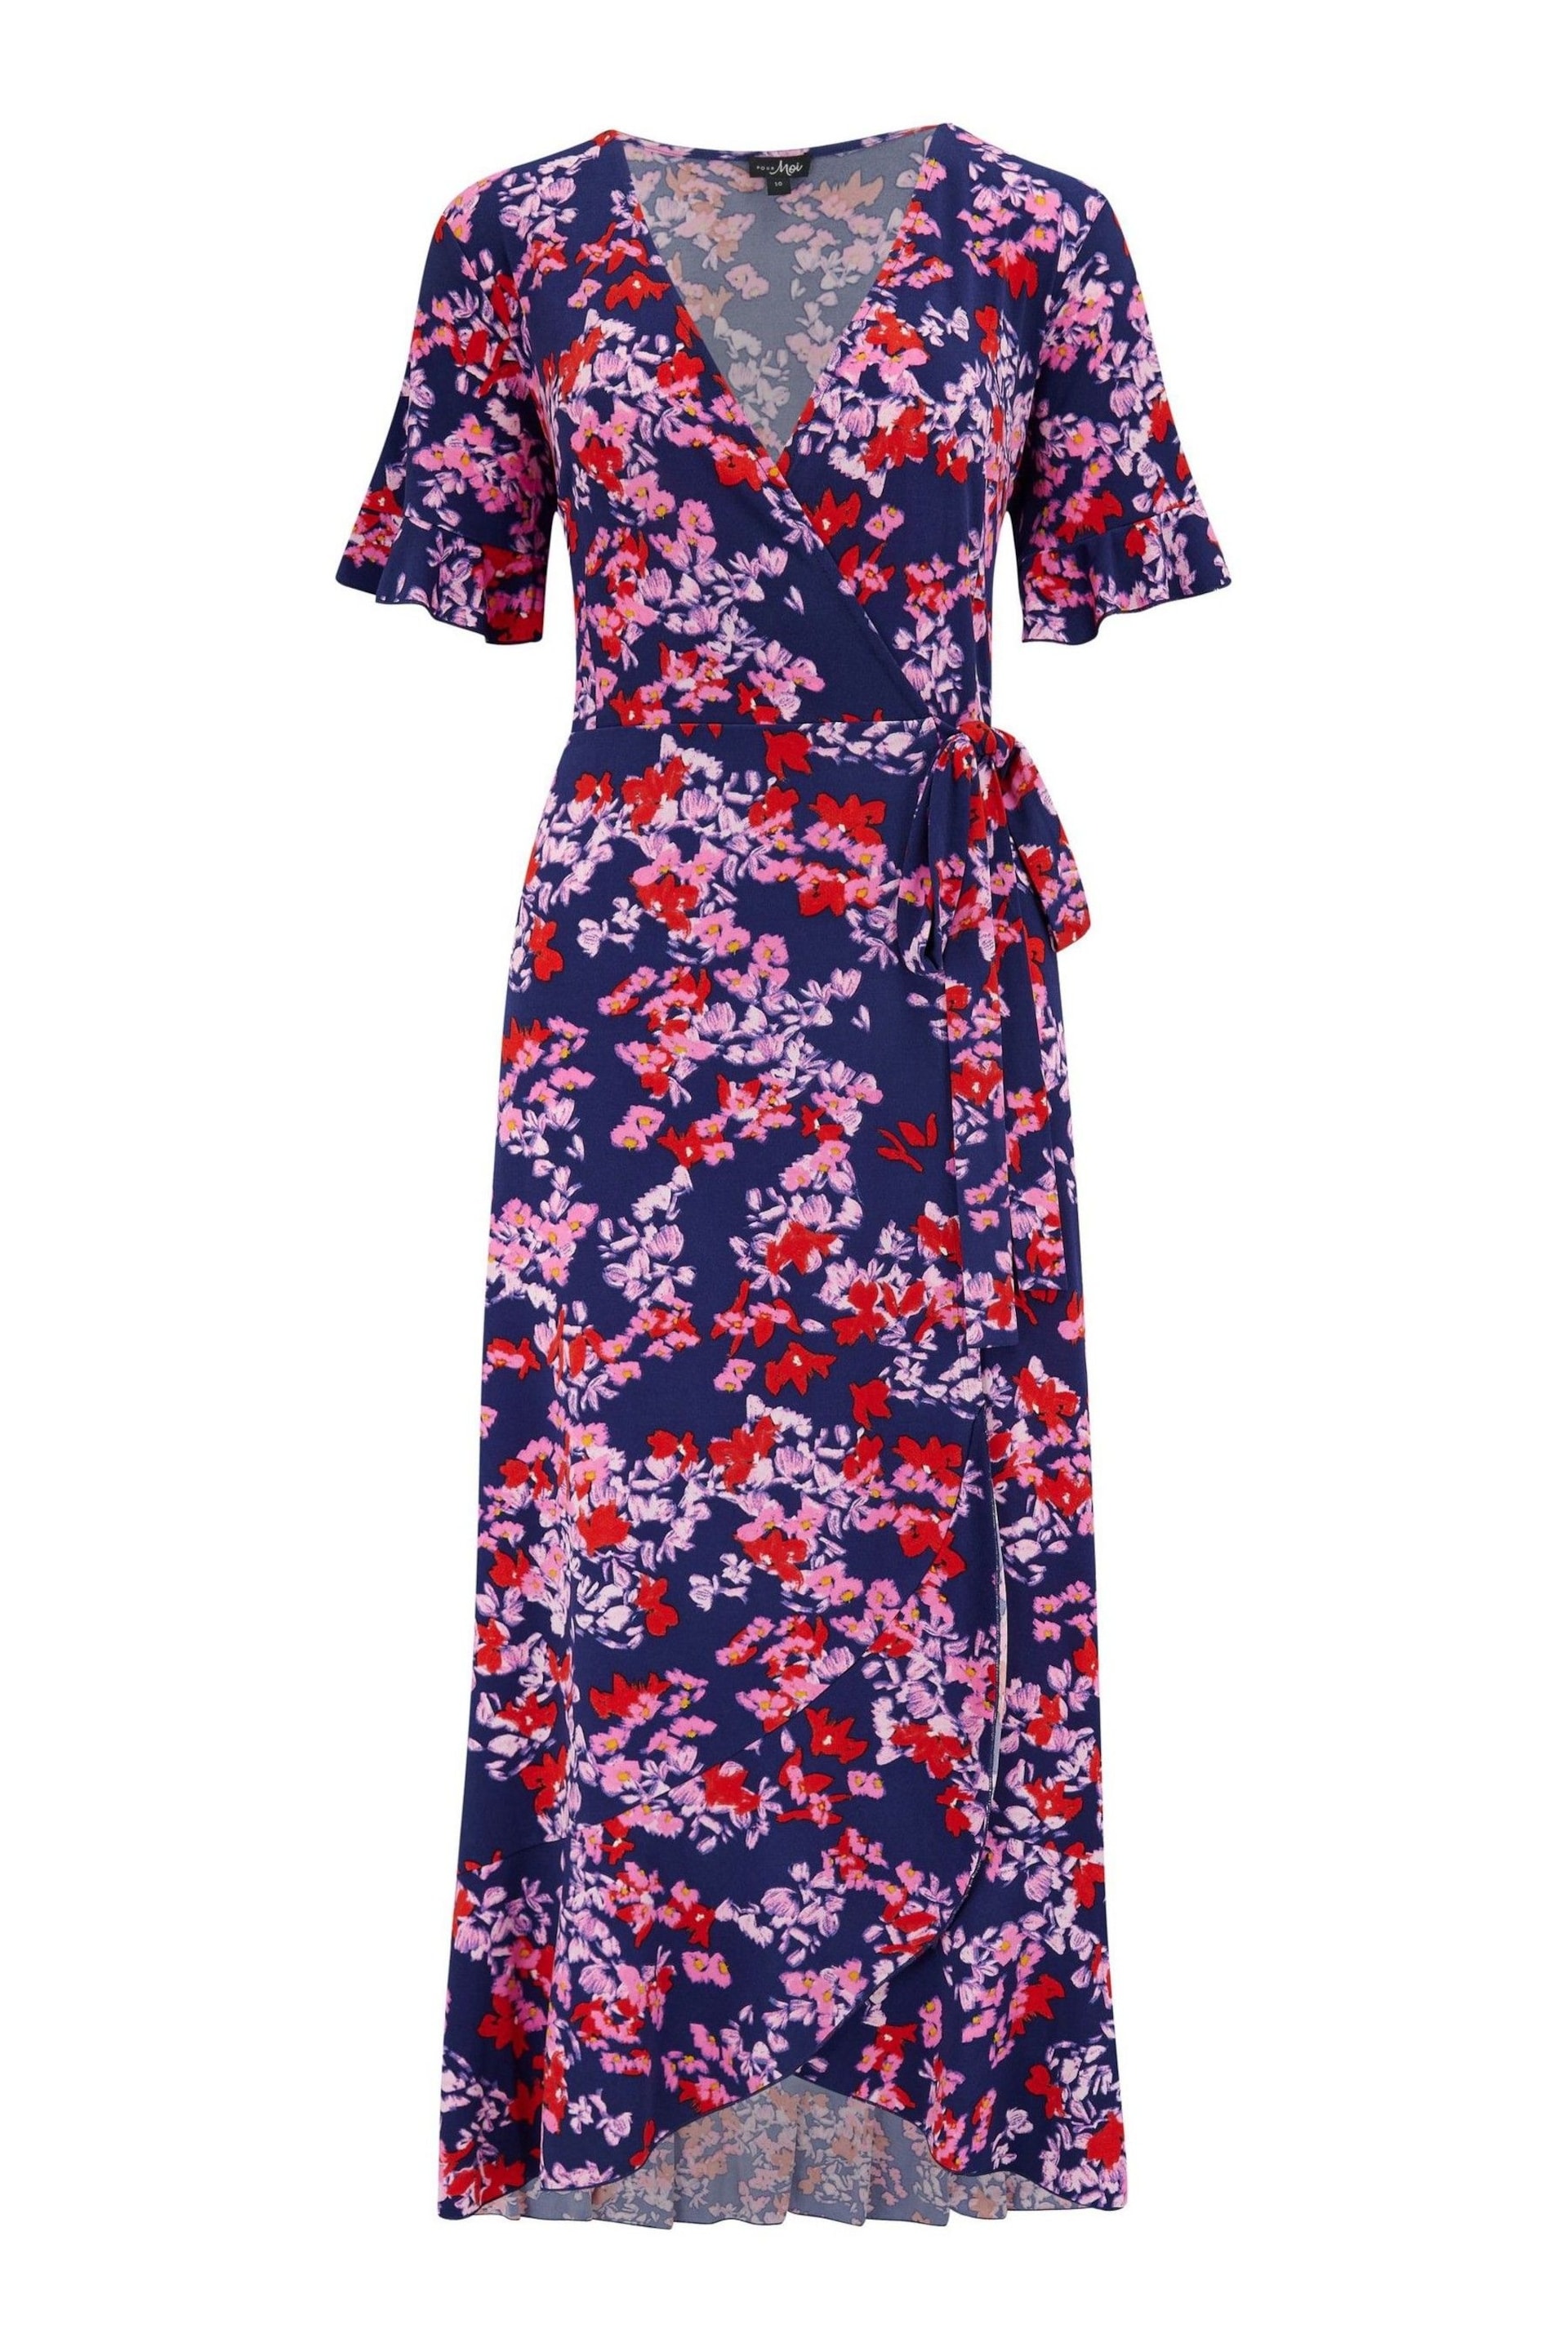 Pour Moi Pink & Purple Print Megan Fuller Bust Slinky Jersey Frill Detail Midi Wrap Dress - Image 3 of 4